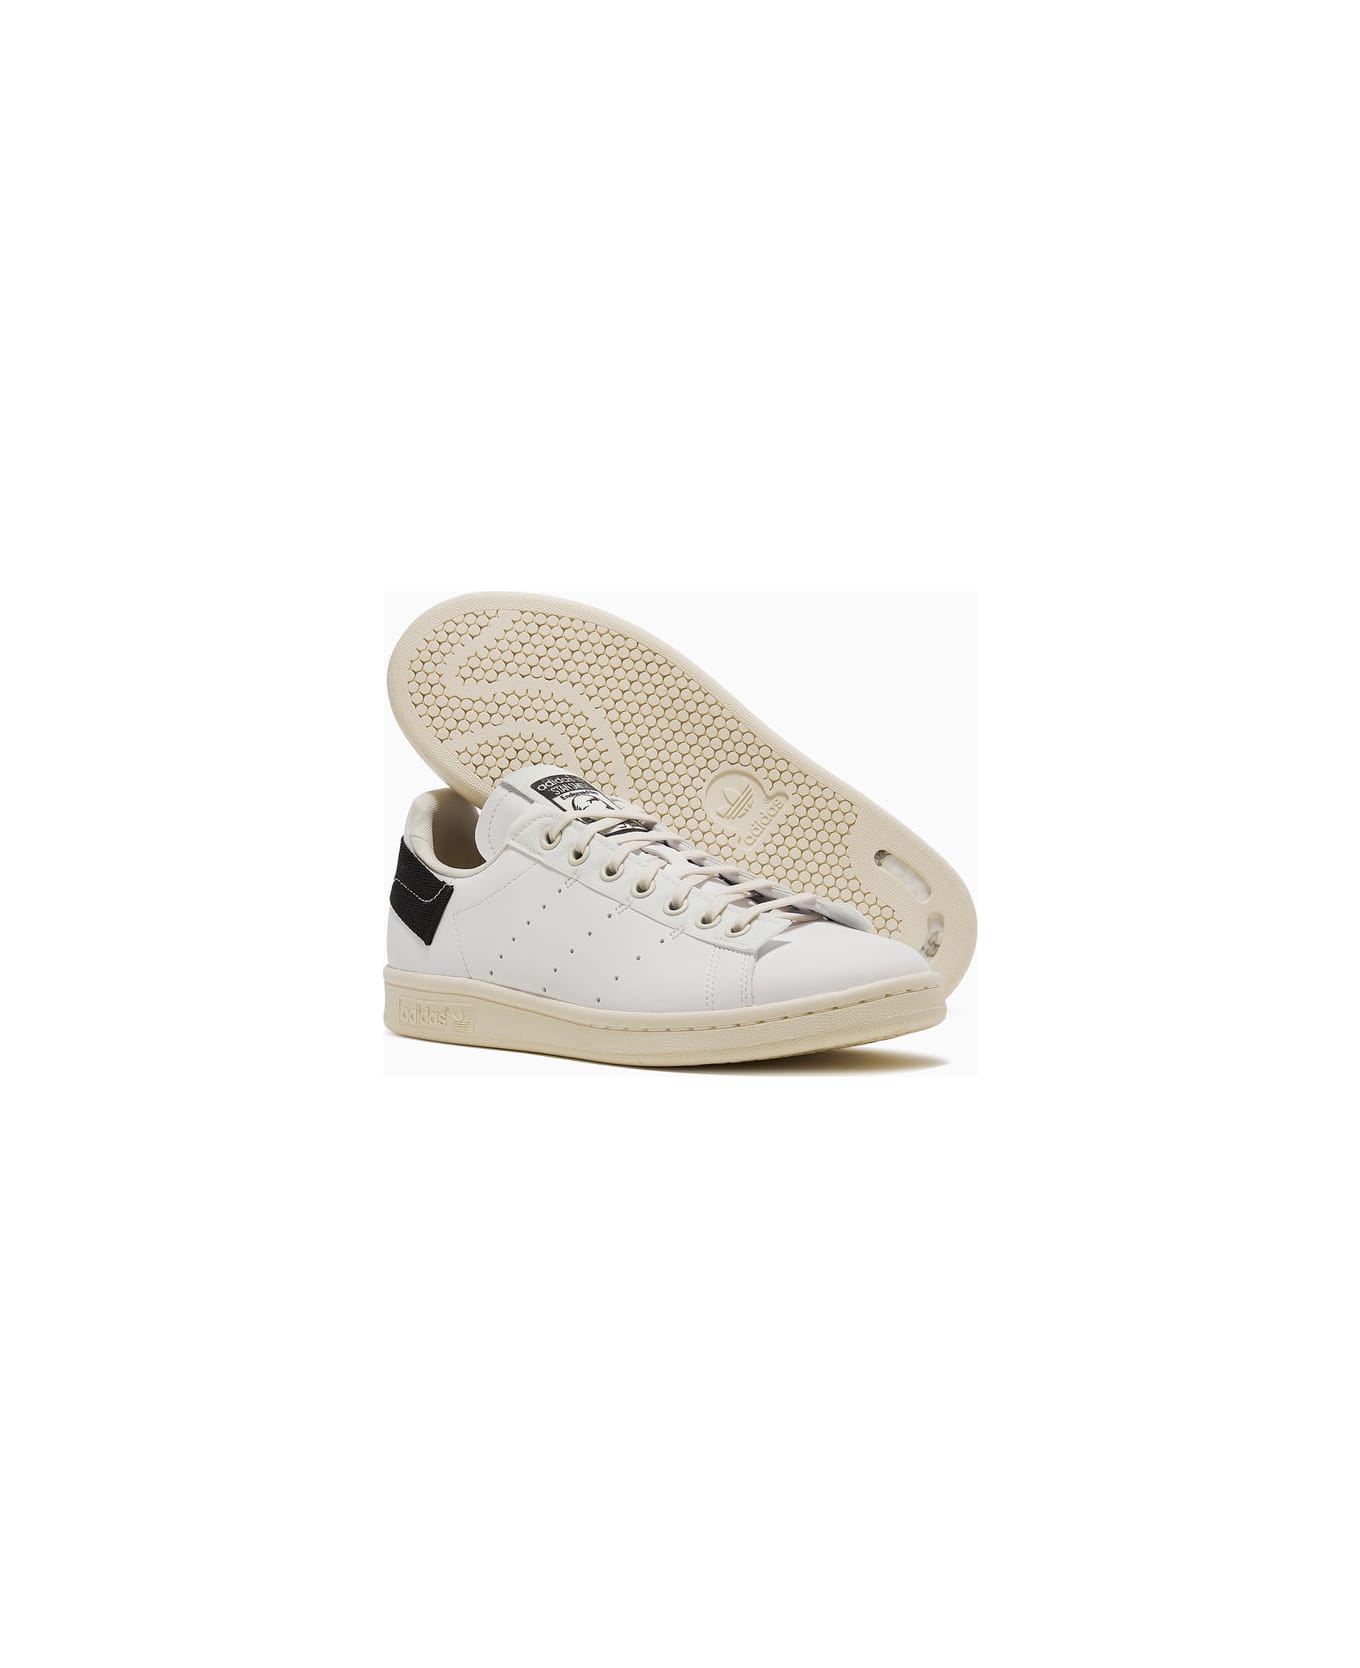 Adidas Original Stan Smith Parley Sneakers Gv7614 - WHITE